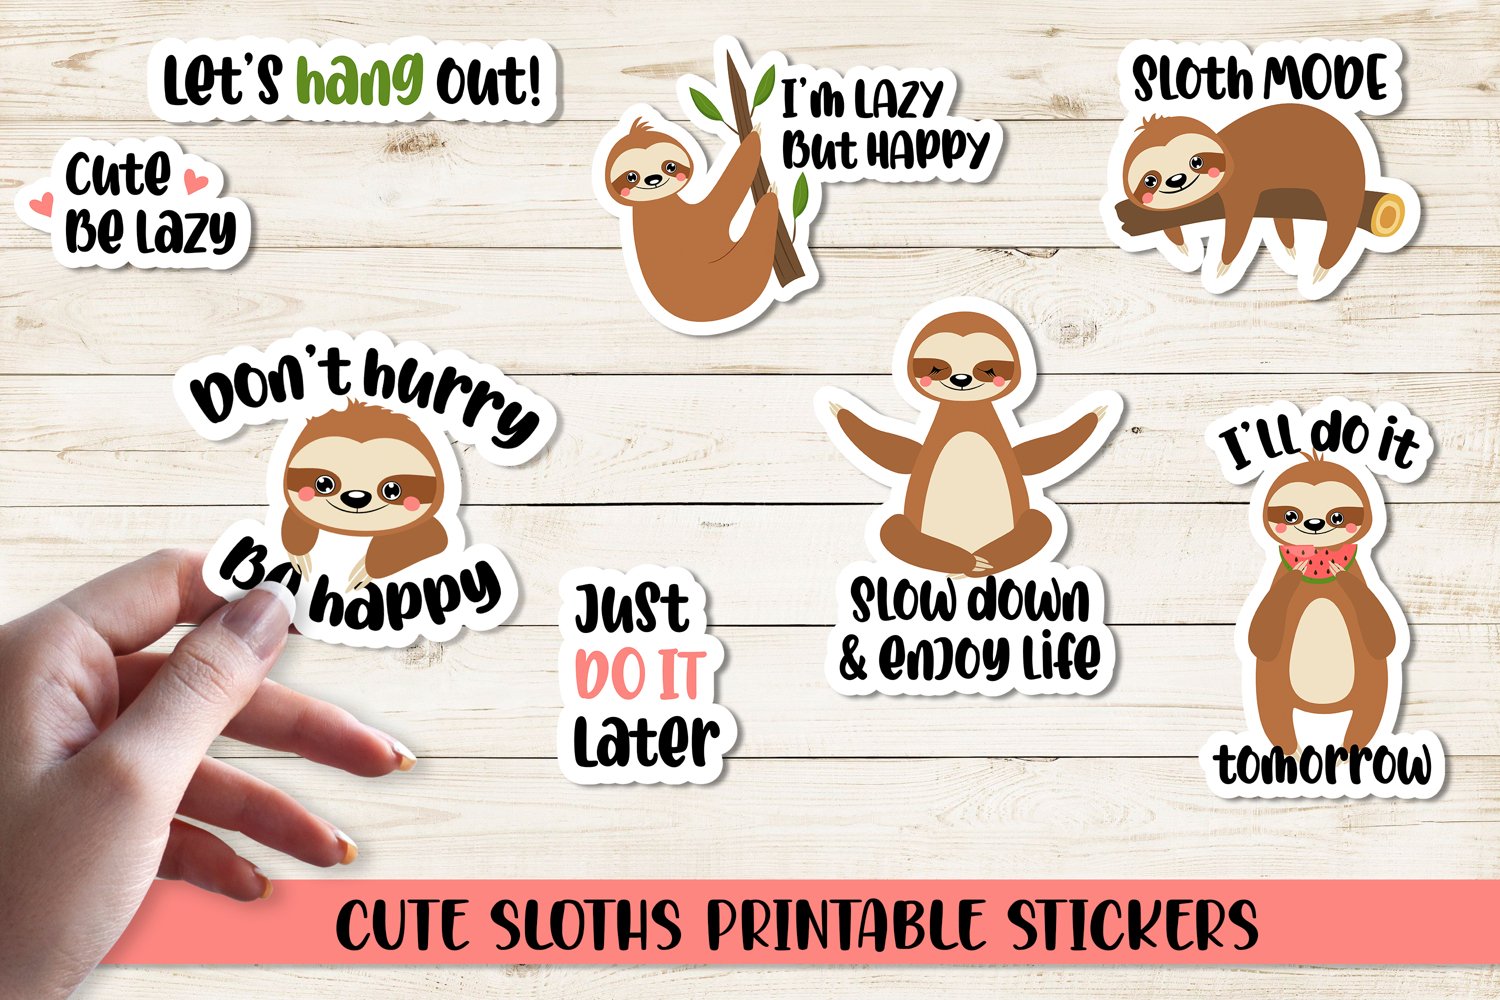 Cute sloth printable stickers.